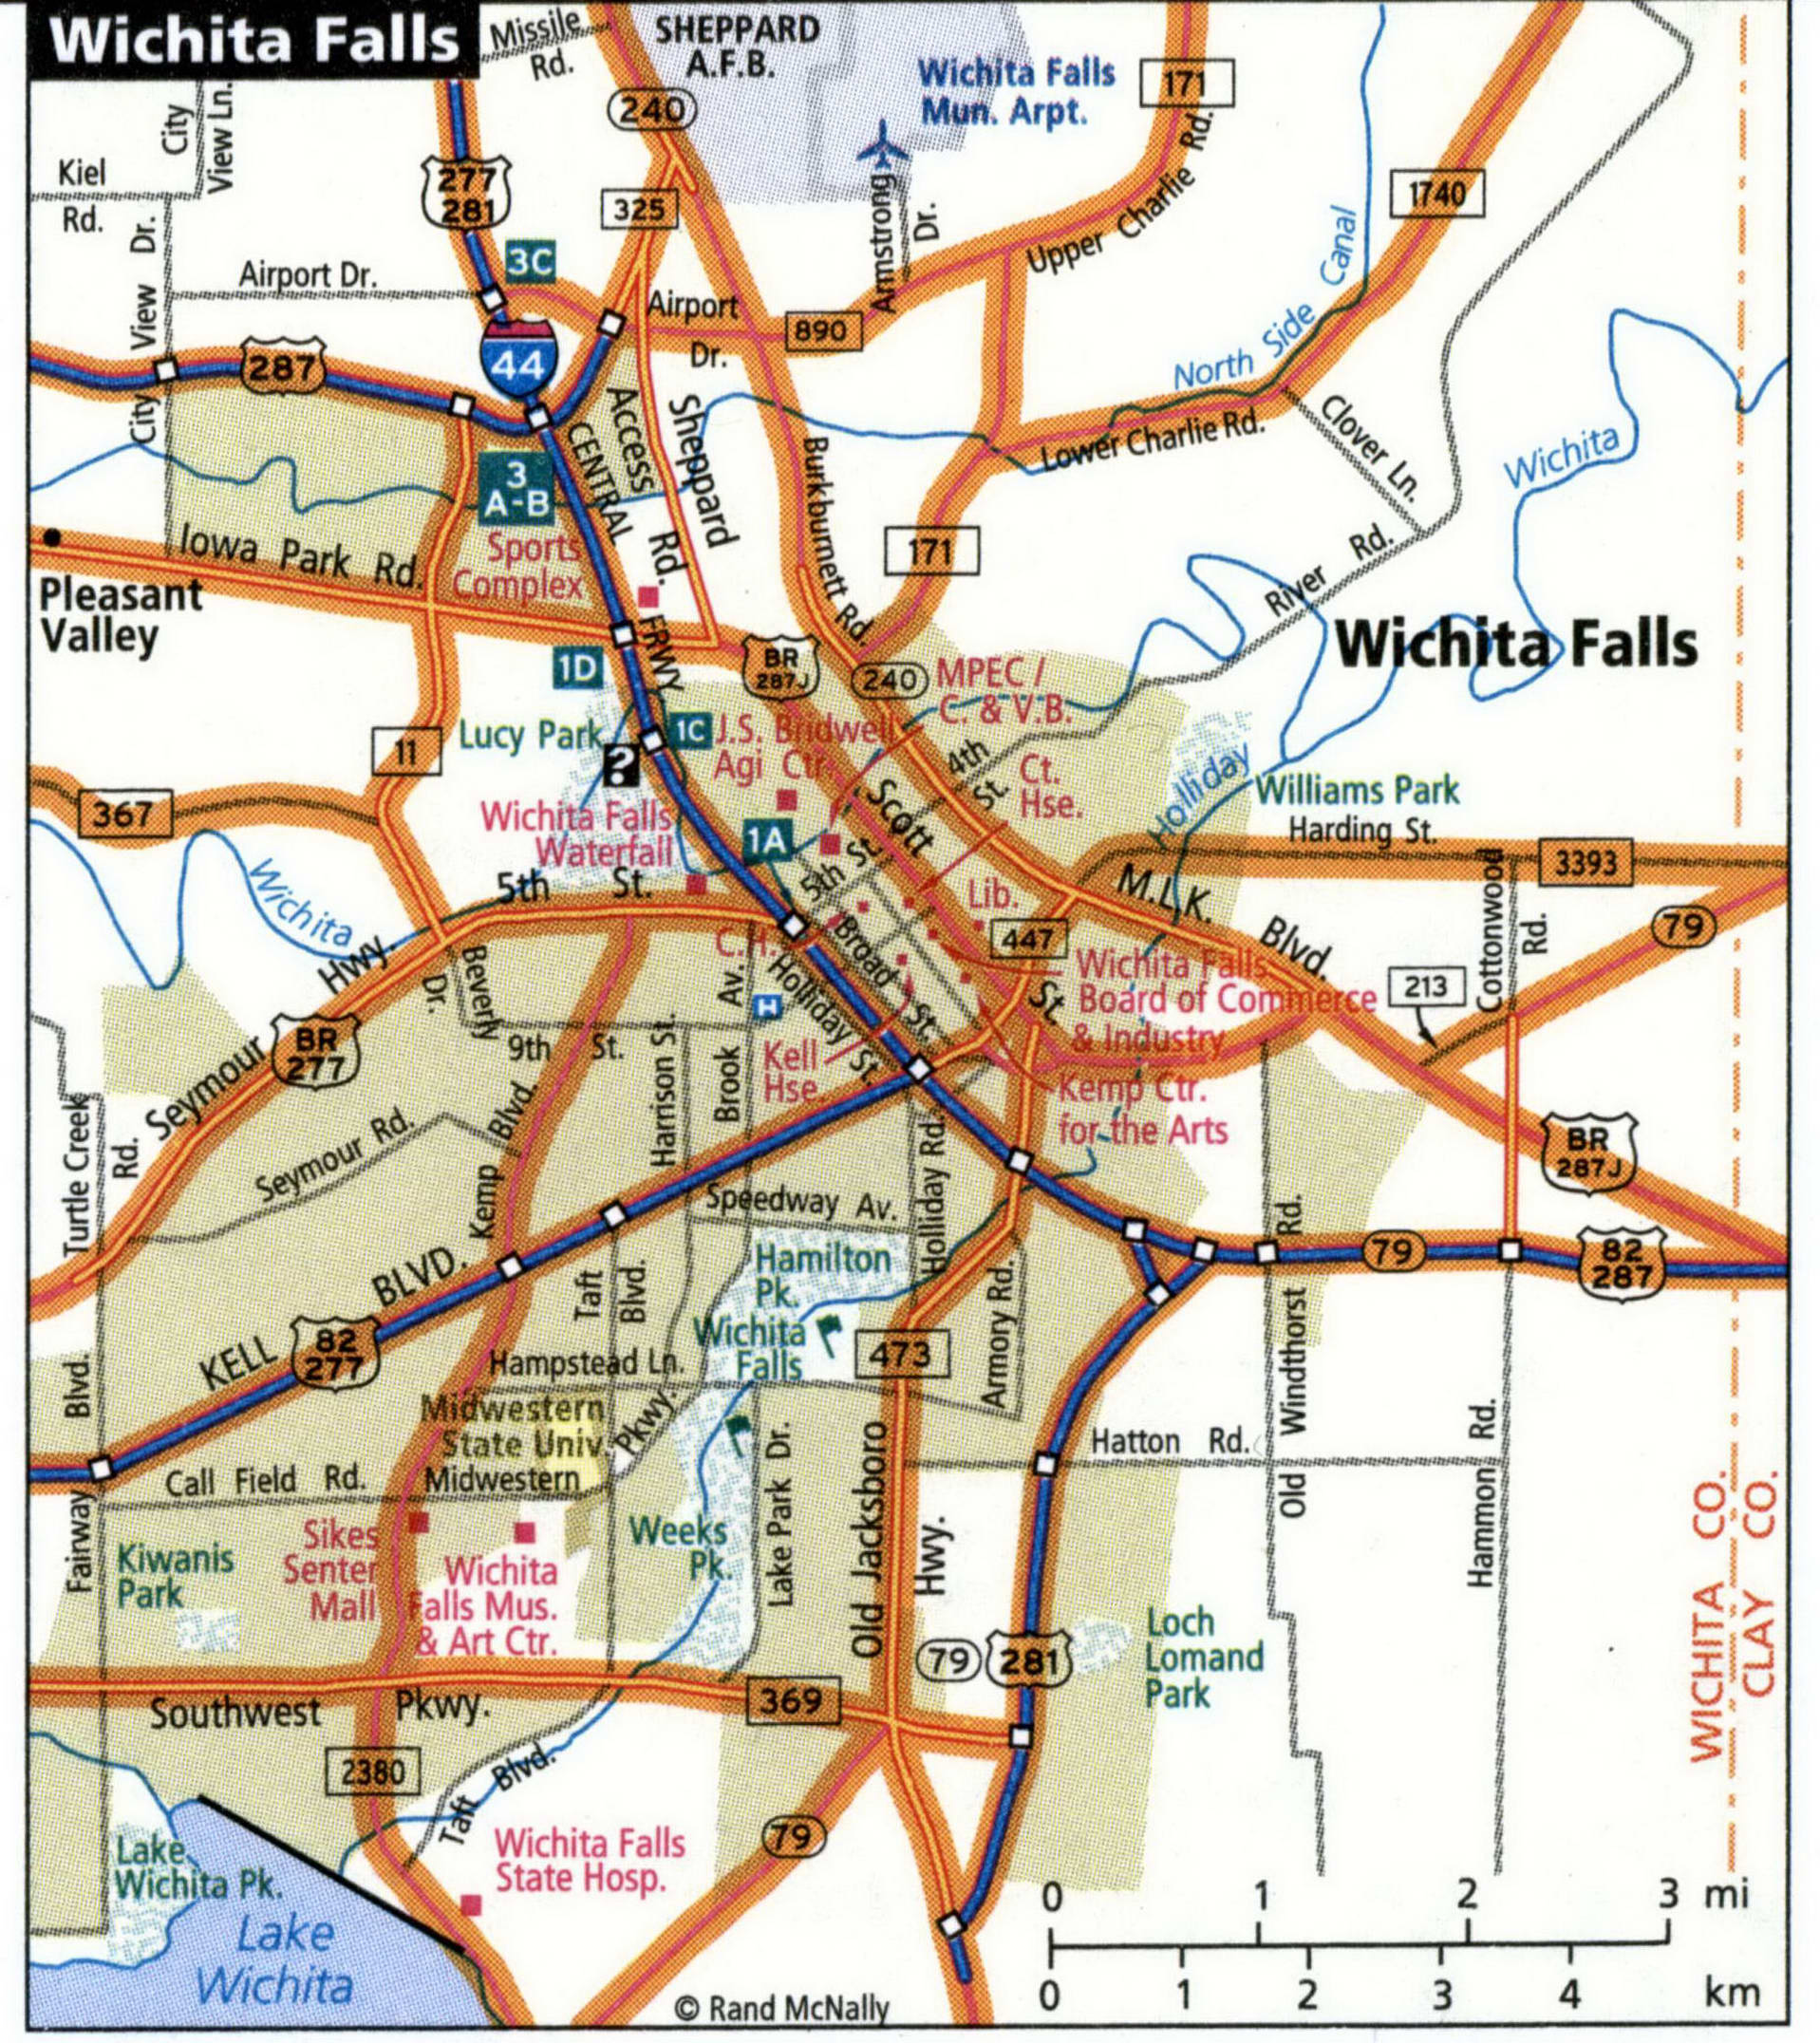 Wichita Falls city map for truckers